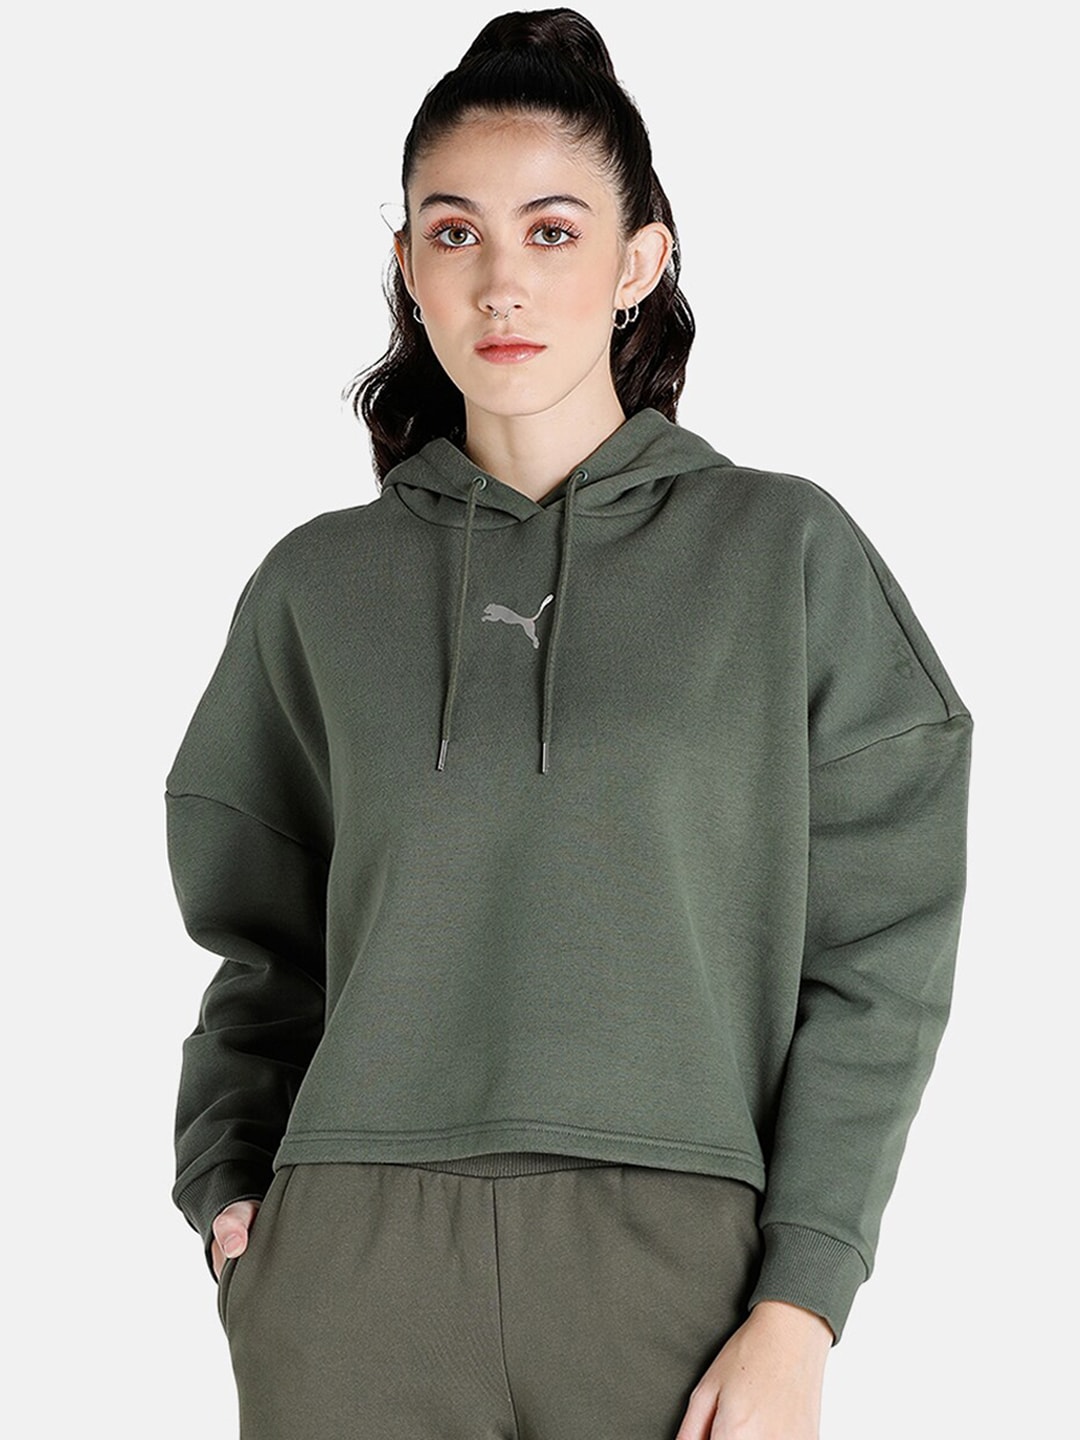 Puma Women Green Hooded Cotton Sweatshirt Price in India